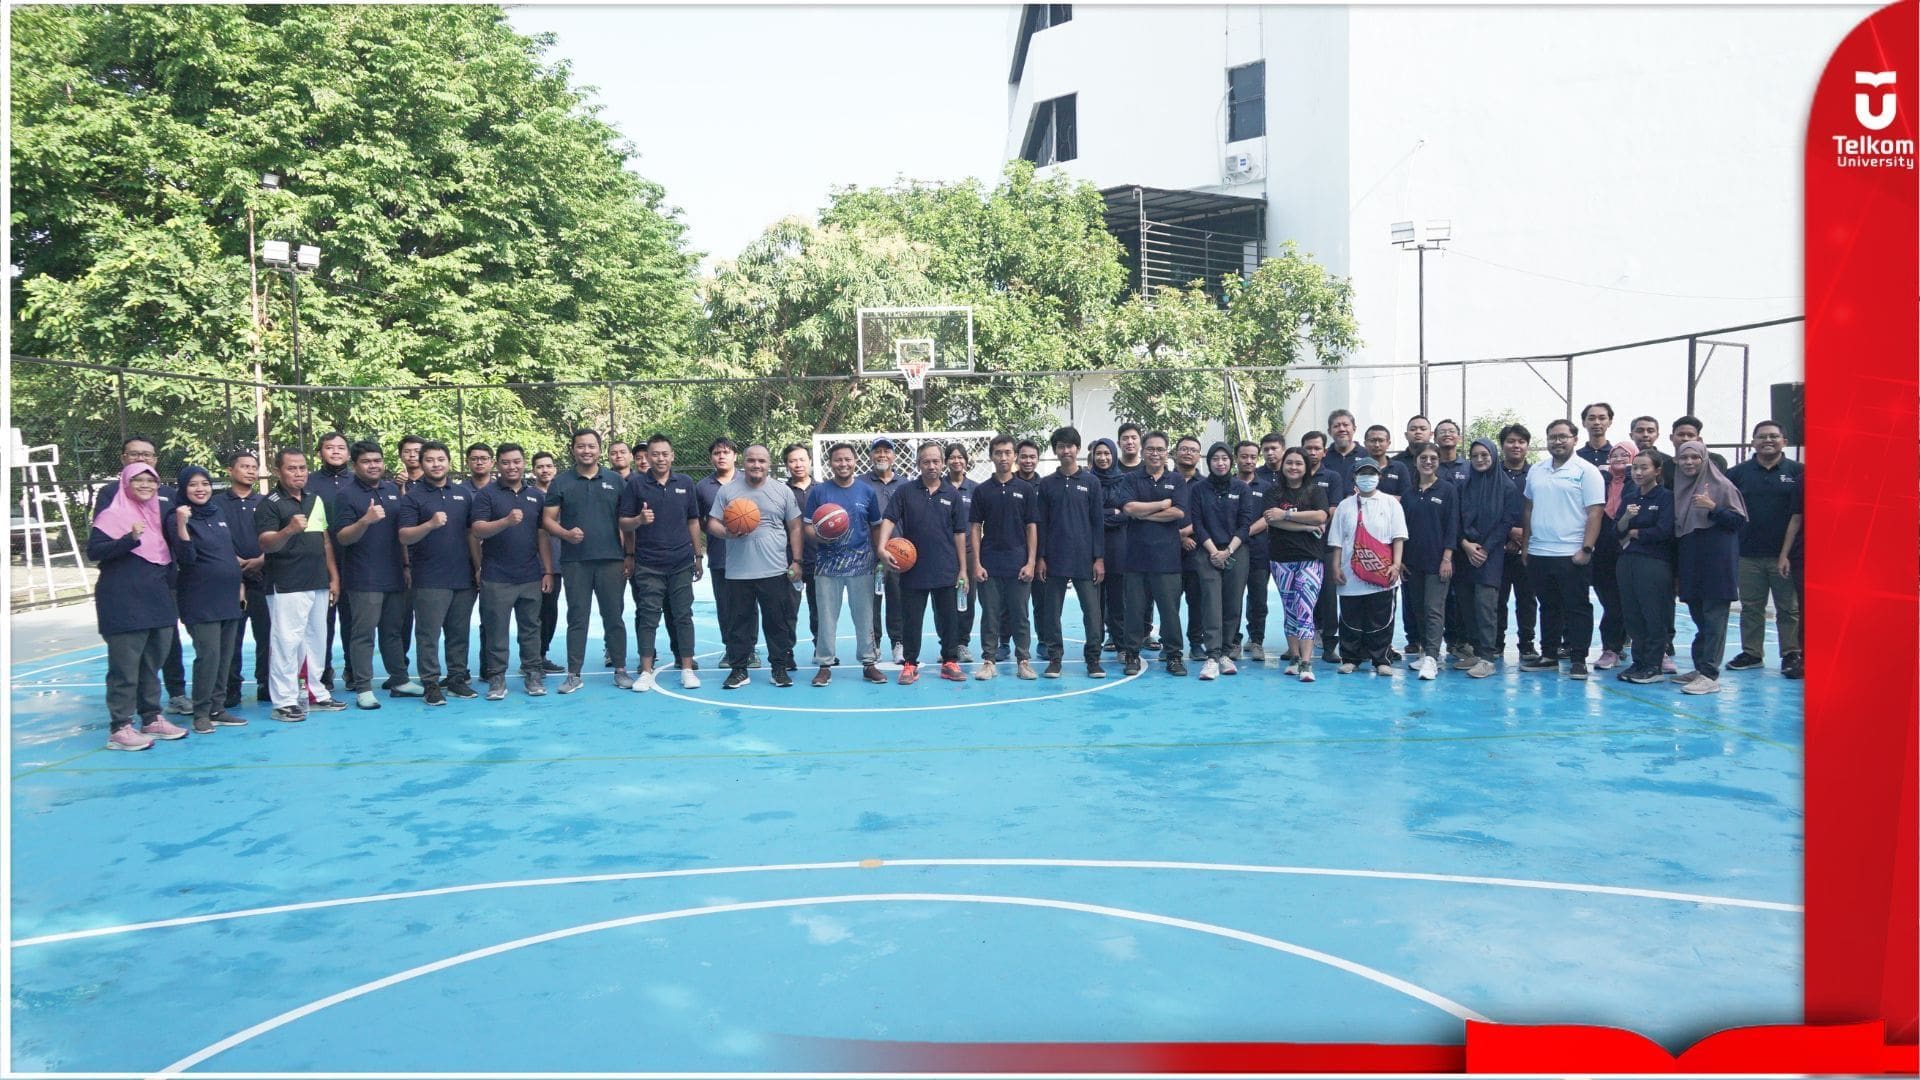 Softlaunching Lapangan Telkom University Surabaya: Menggalang Semangat Olahraga